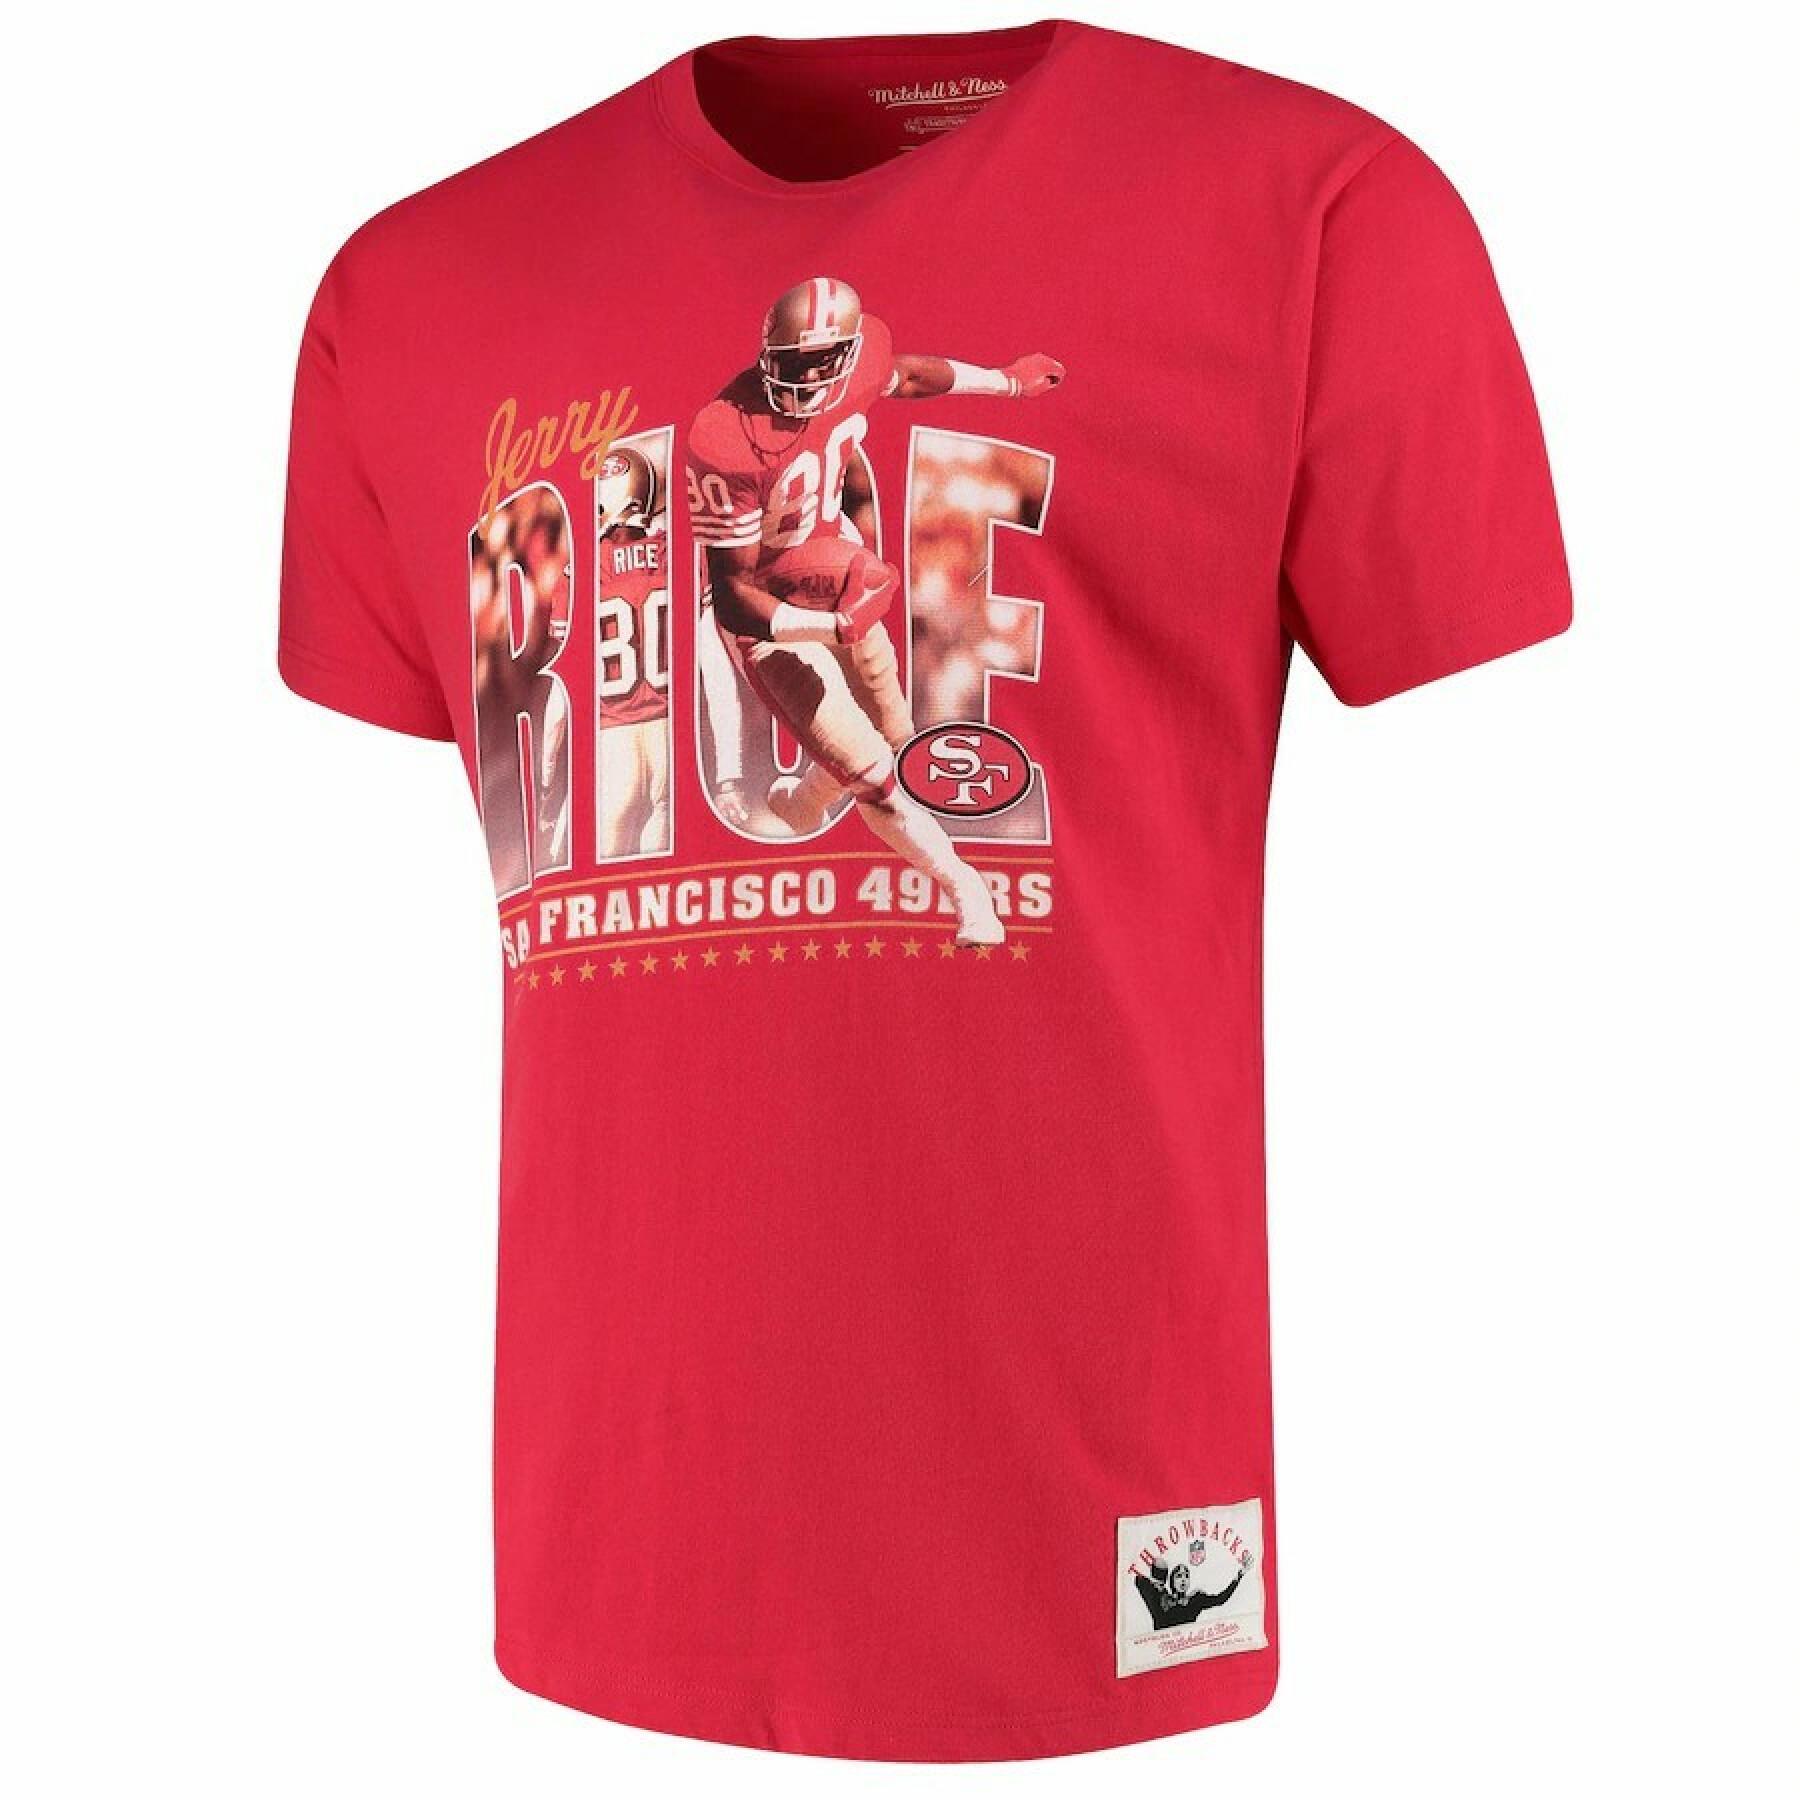 Camiseta San Francisco 49ers arch infill photo real